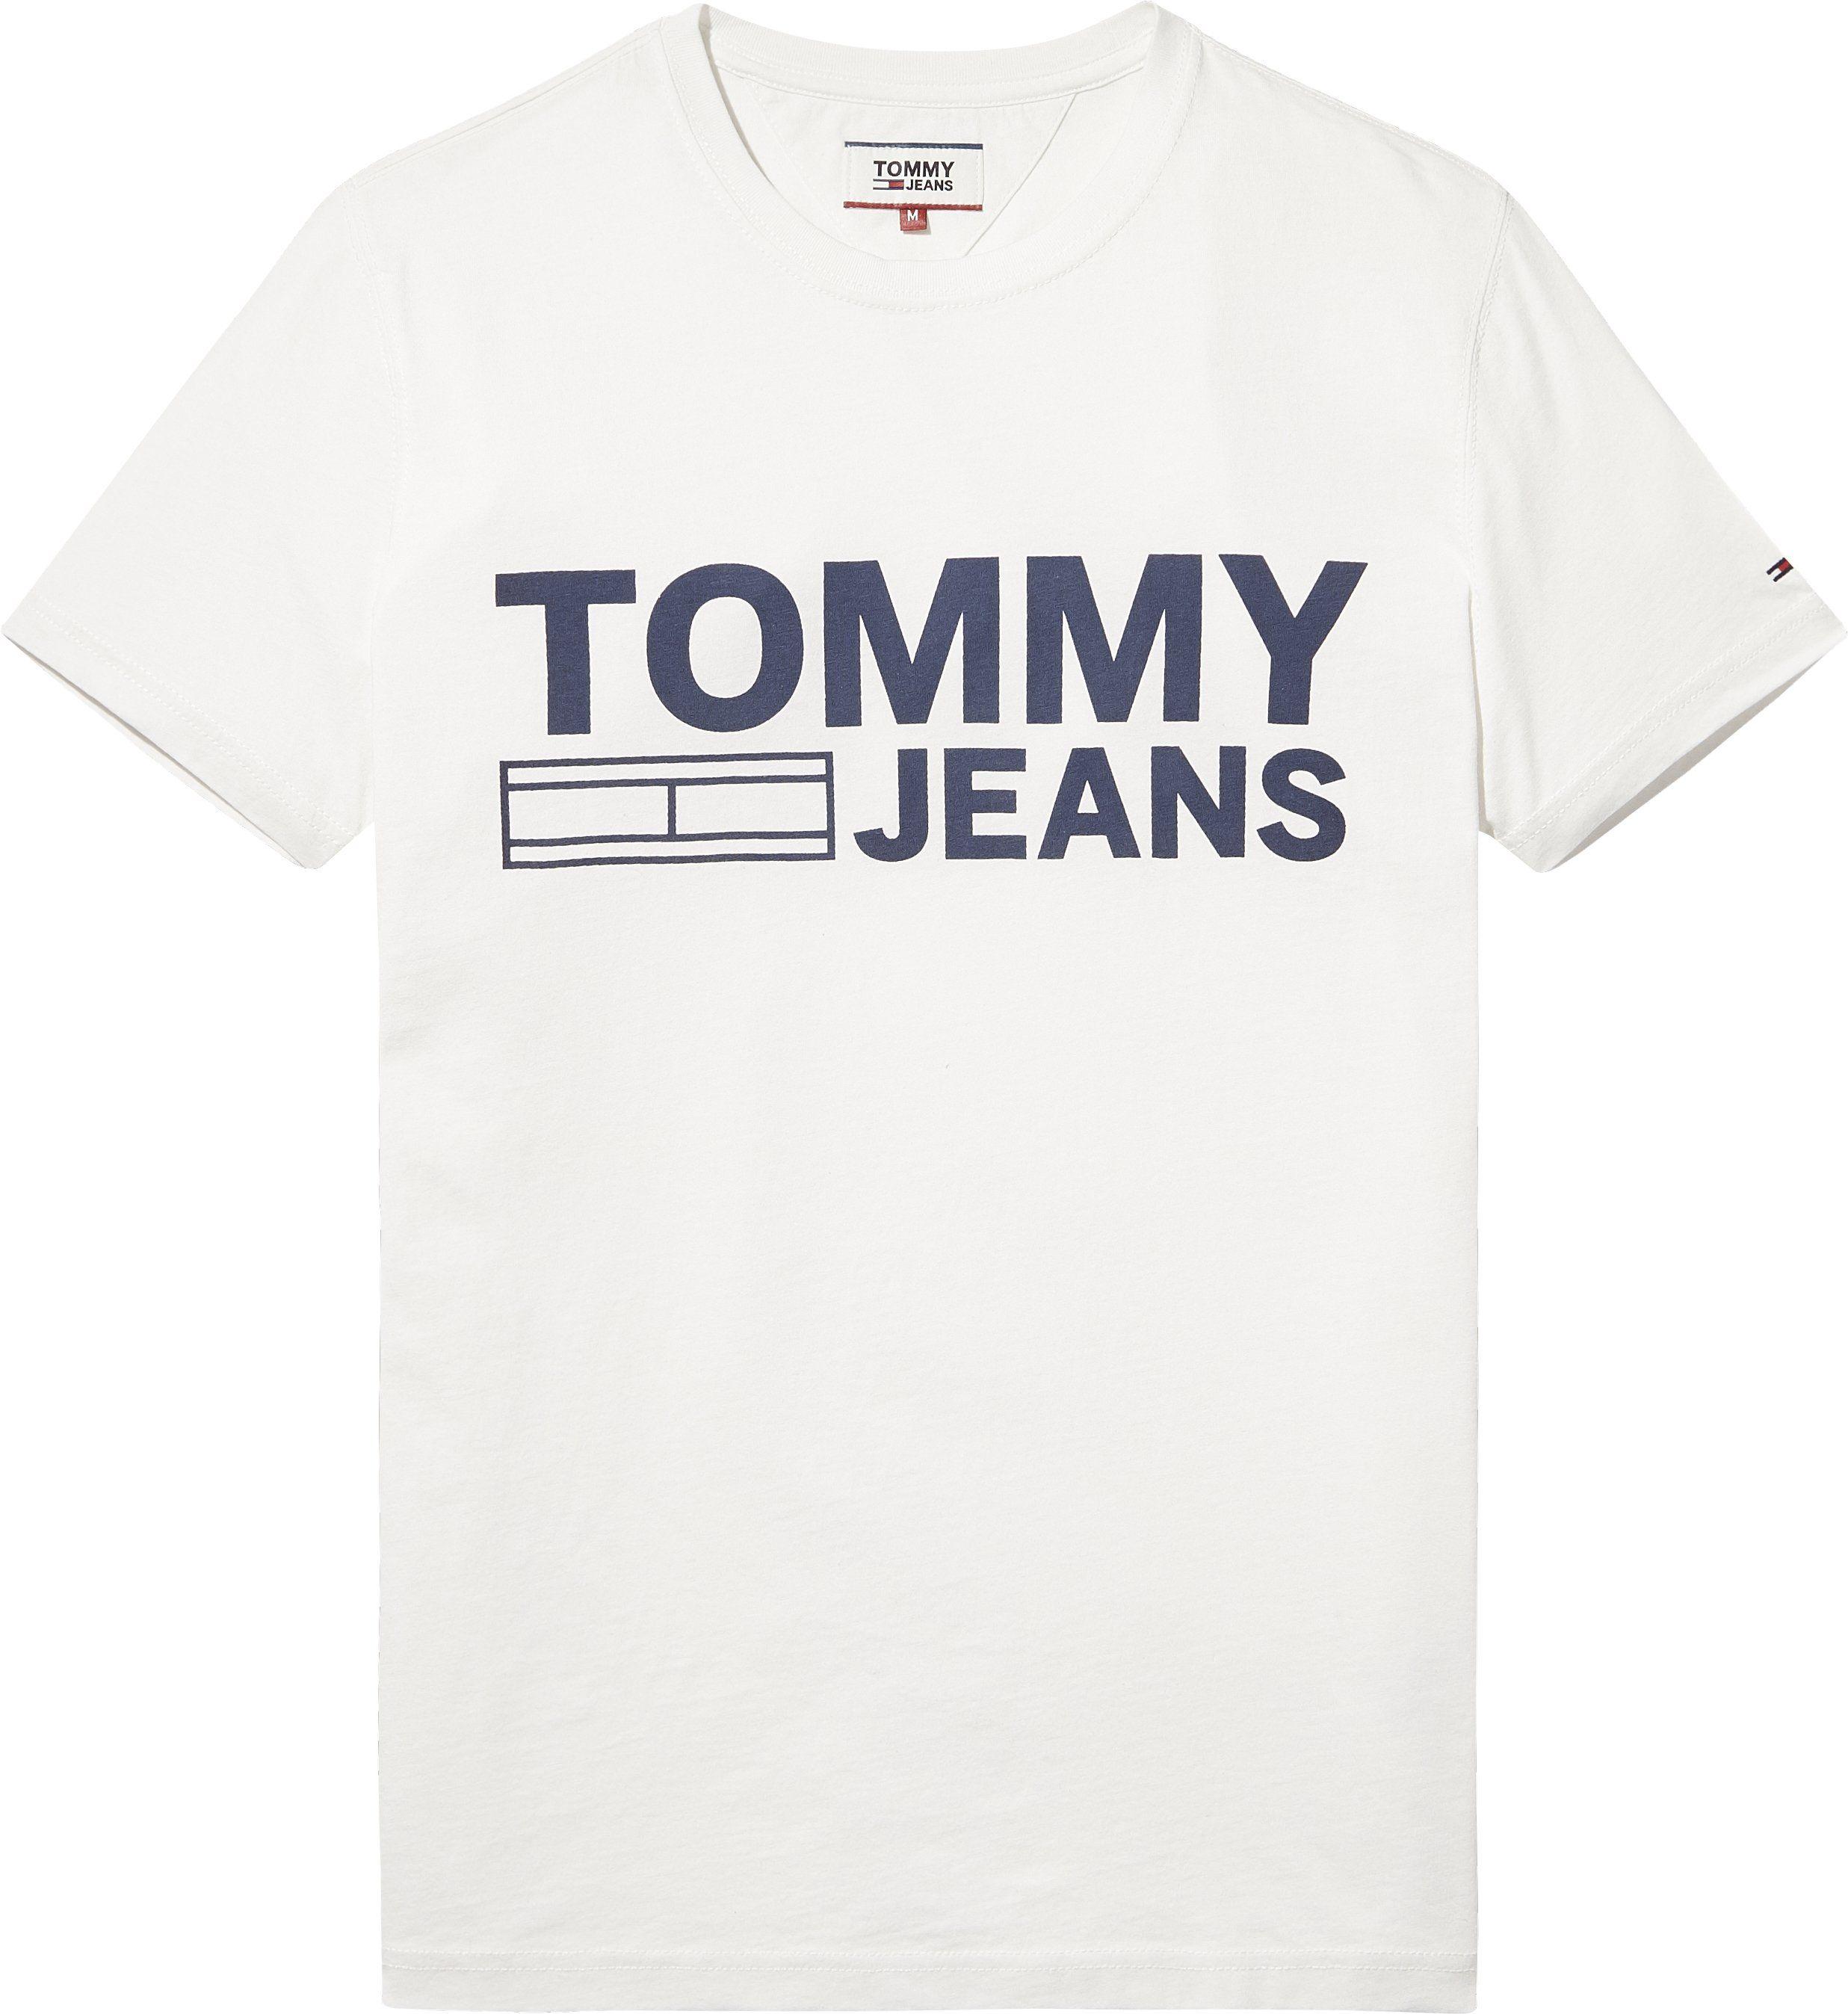 Tommy Jeans Logo - TOMMY JEANS ORGANIC COTTON LOGO T SHIRT